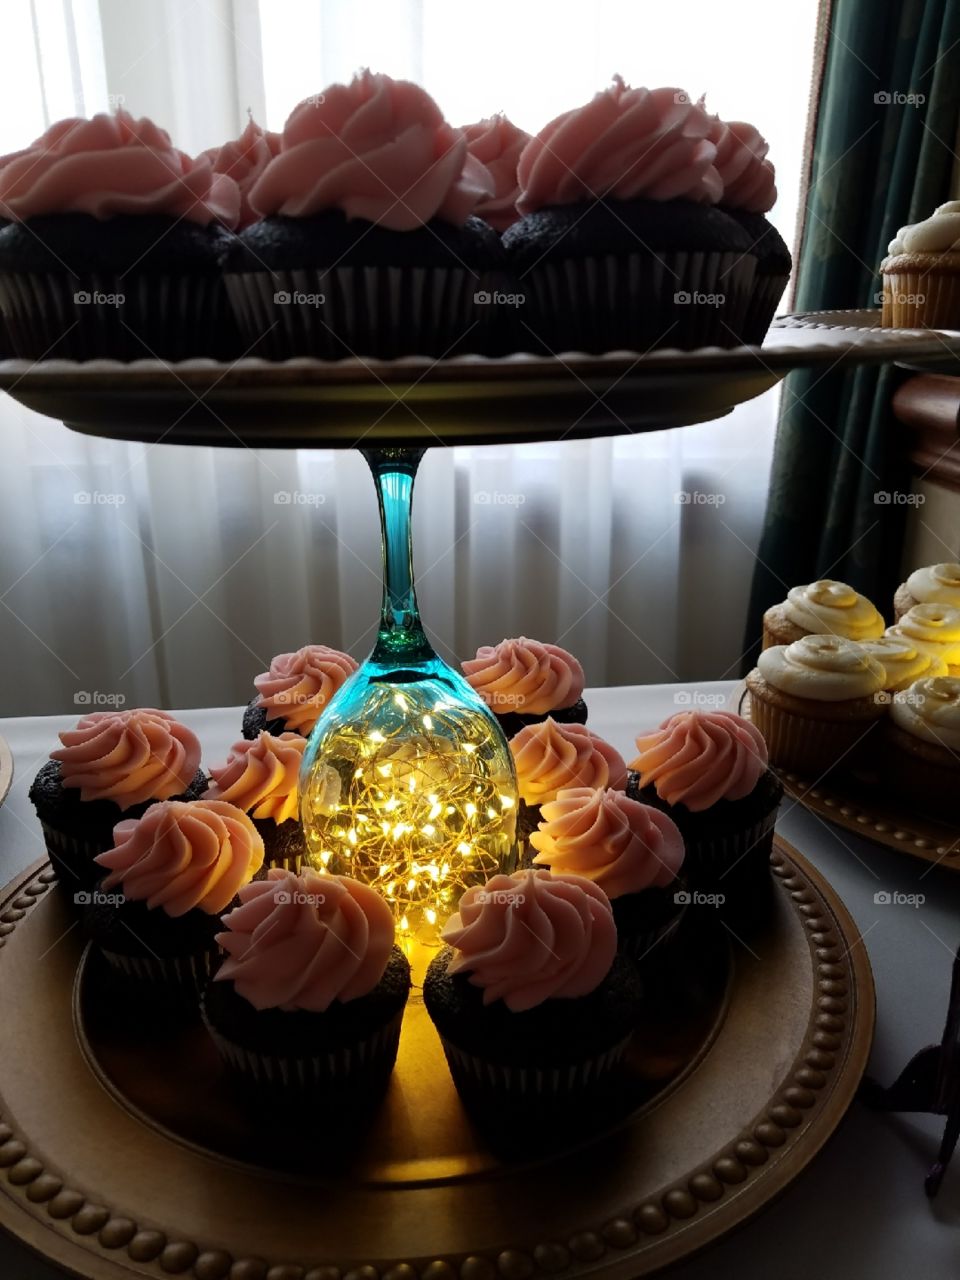 DIY wedding cupcake stands